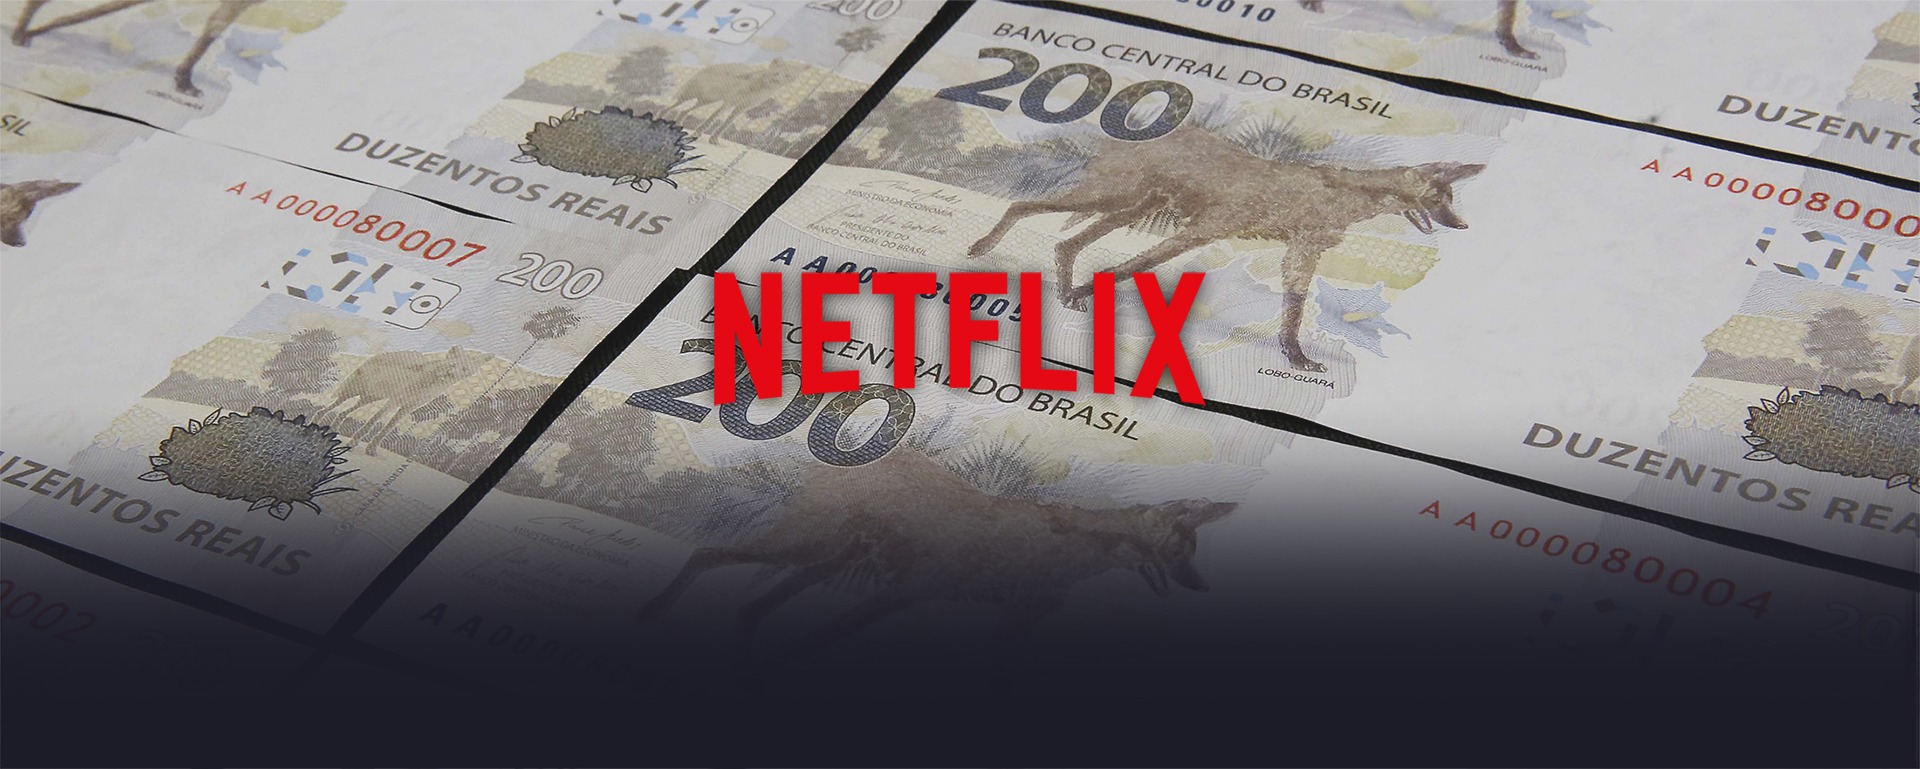 Netflix 200 reais v2